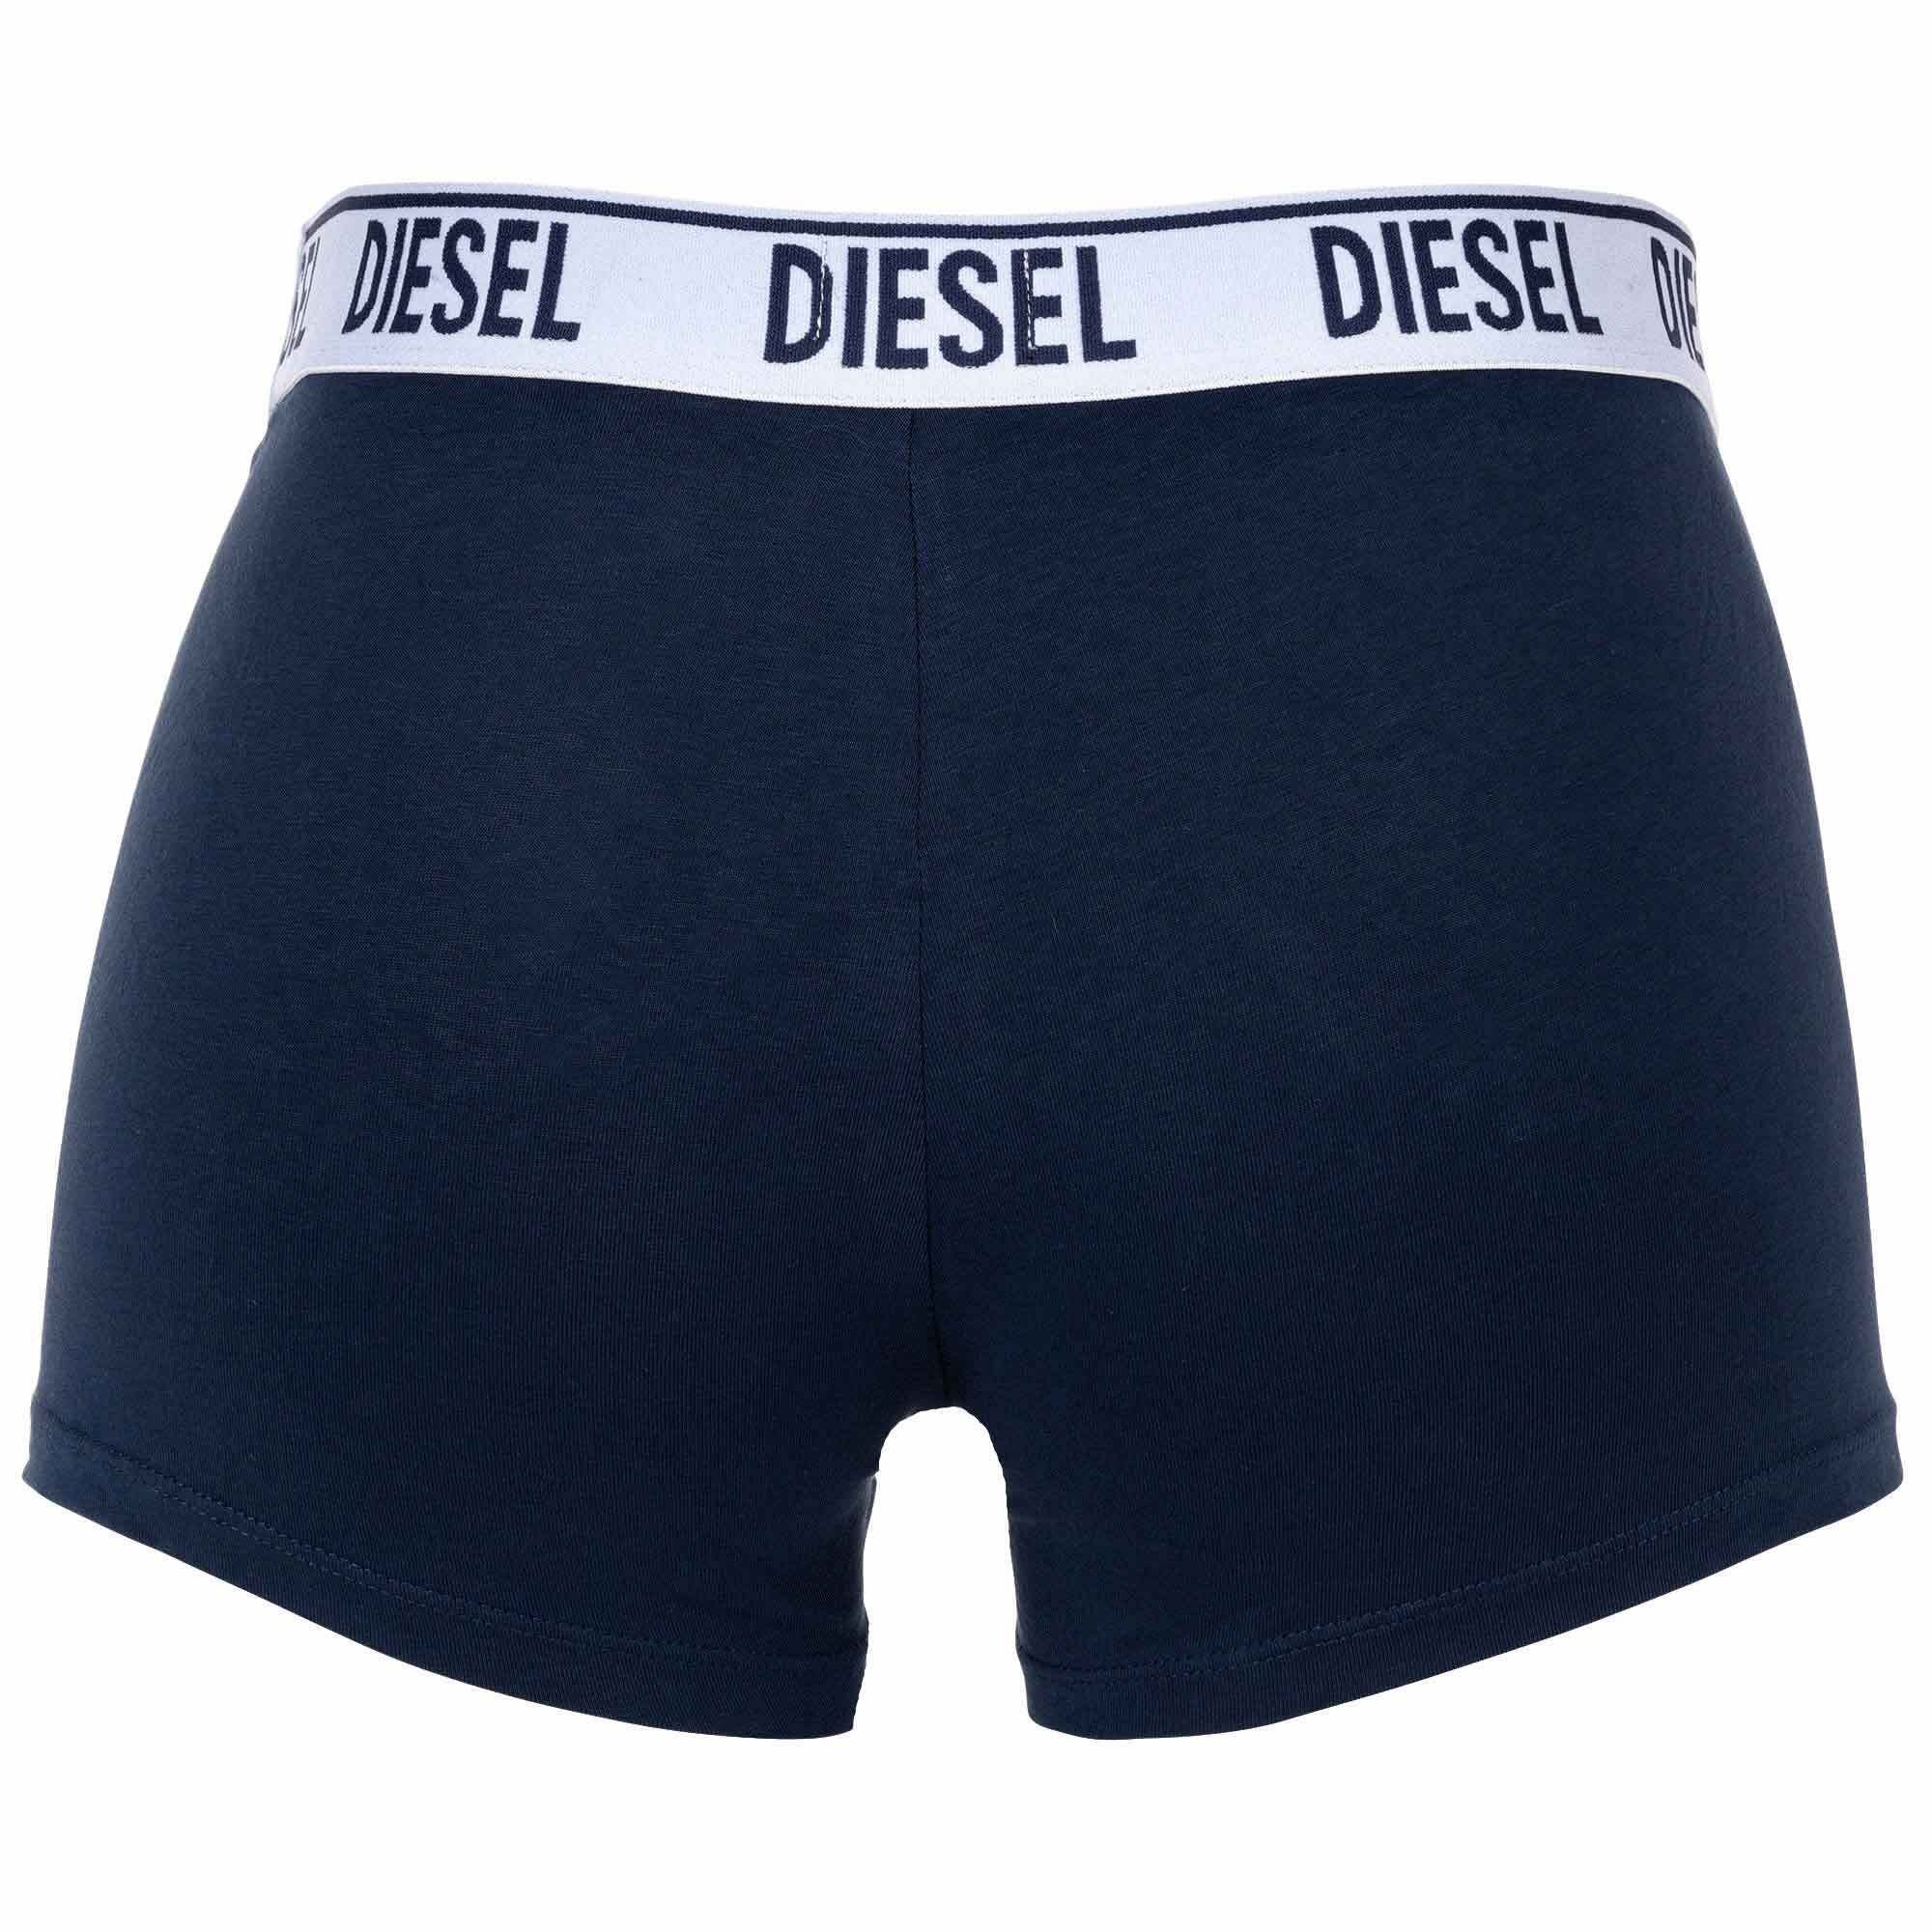 Diesel Boxer Dunkelblau/Blau - Boxershorts, Pack 3er Herren